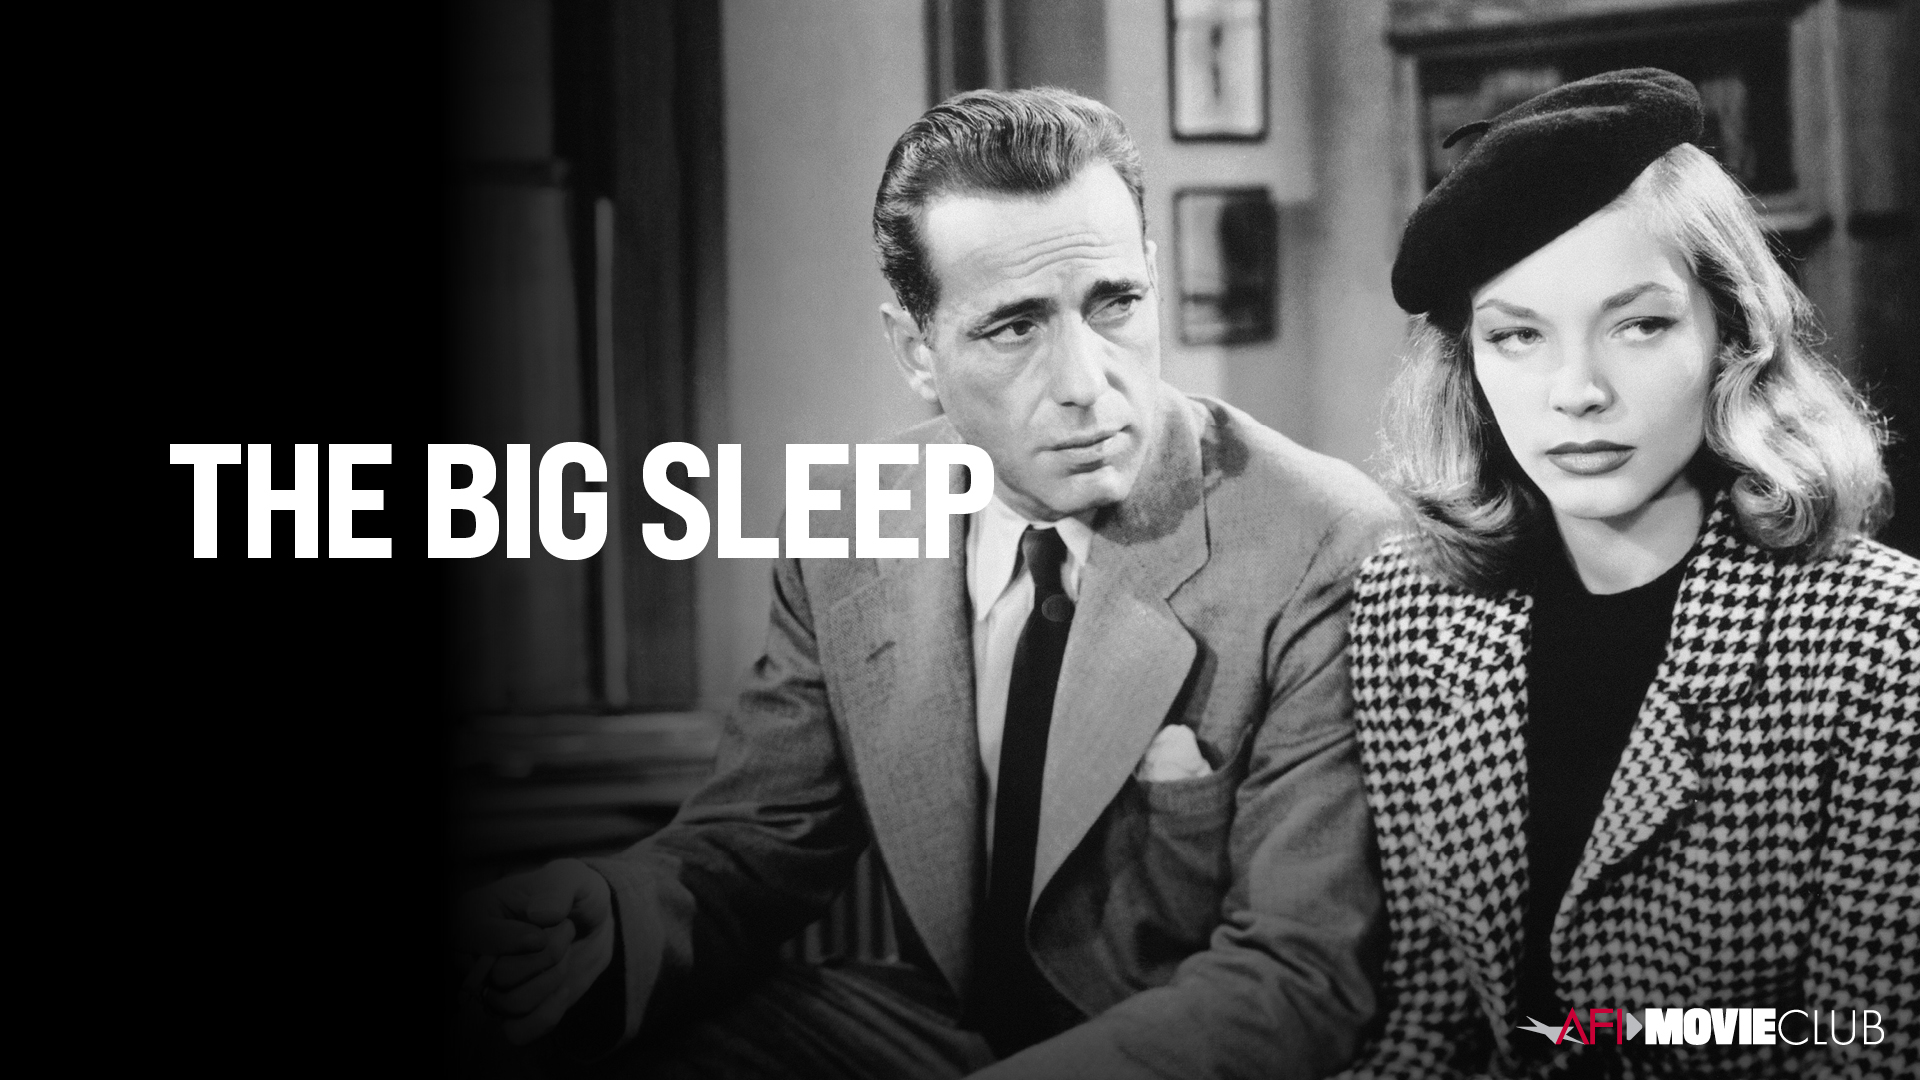 The Big Sleep Film Still - Lauren Bacall and Humphrey Bogart